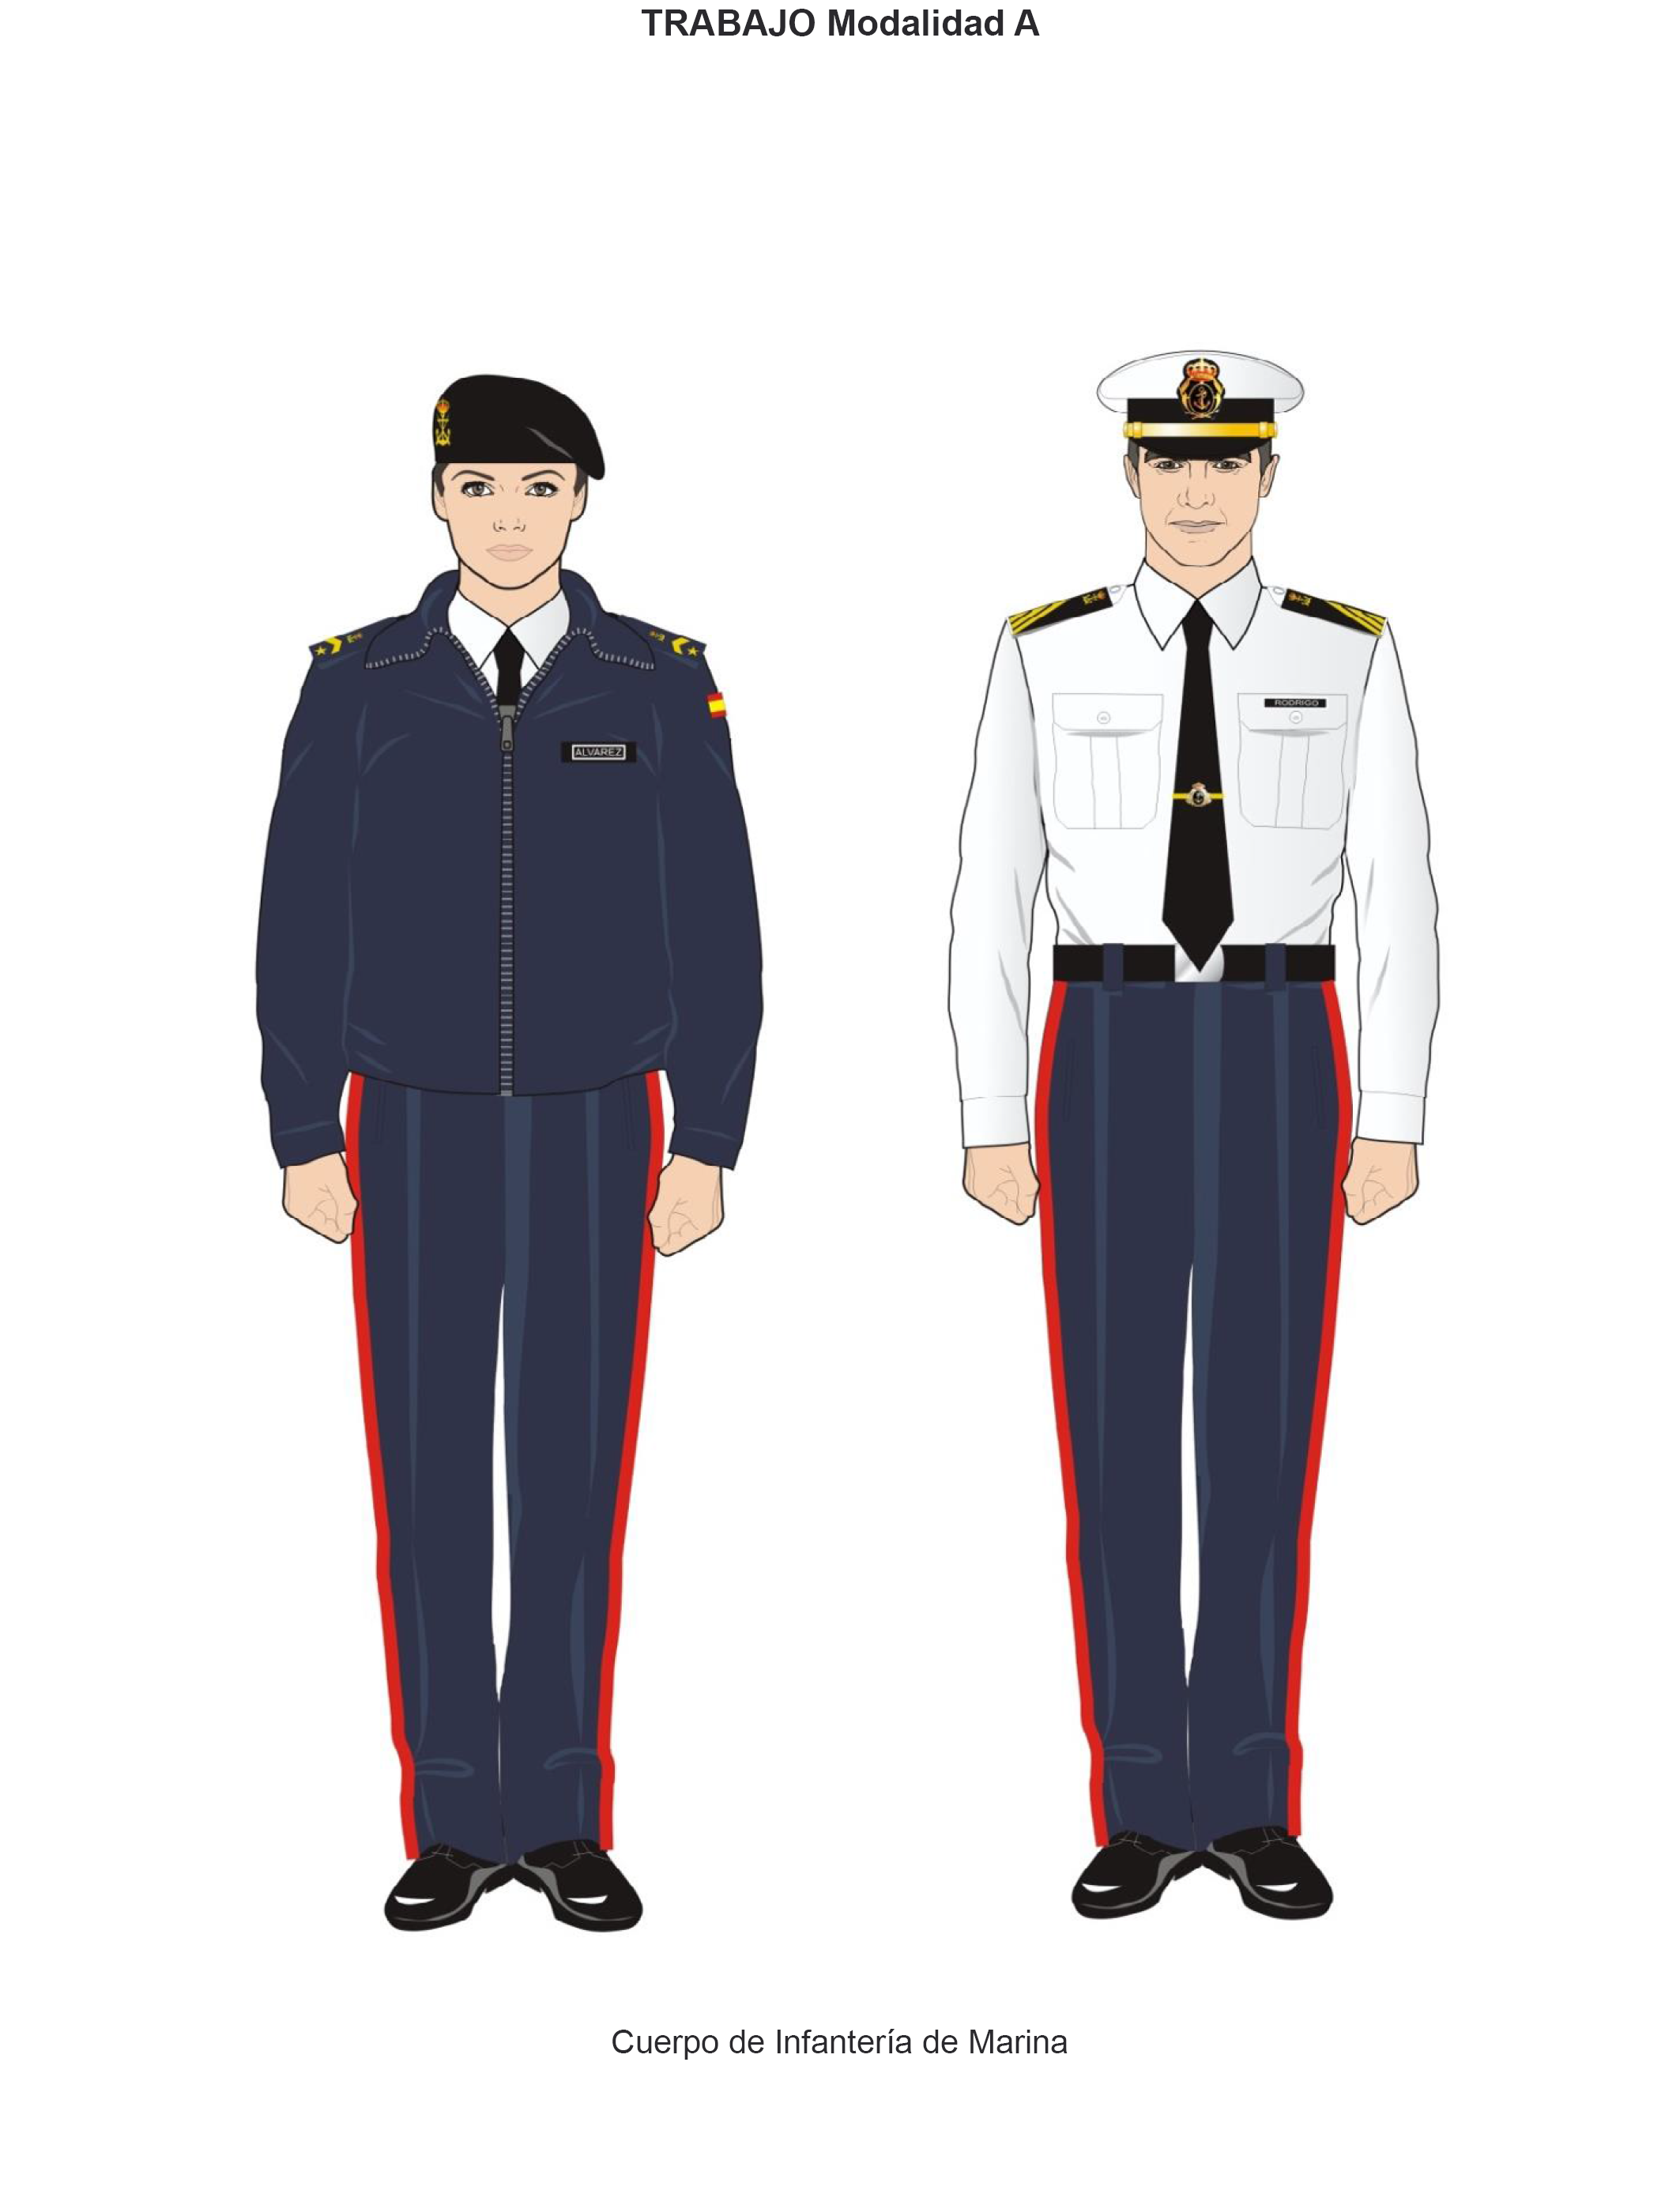 File:Infantería de marina trabajo A.png - Wikipedia